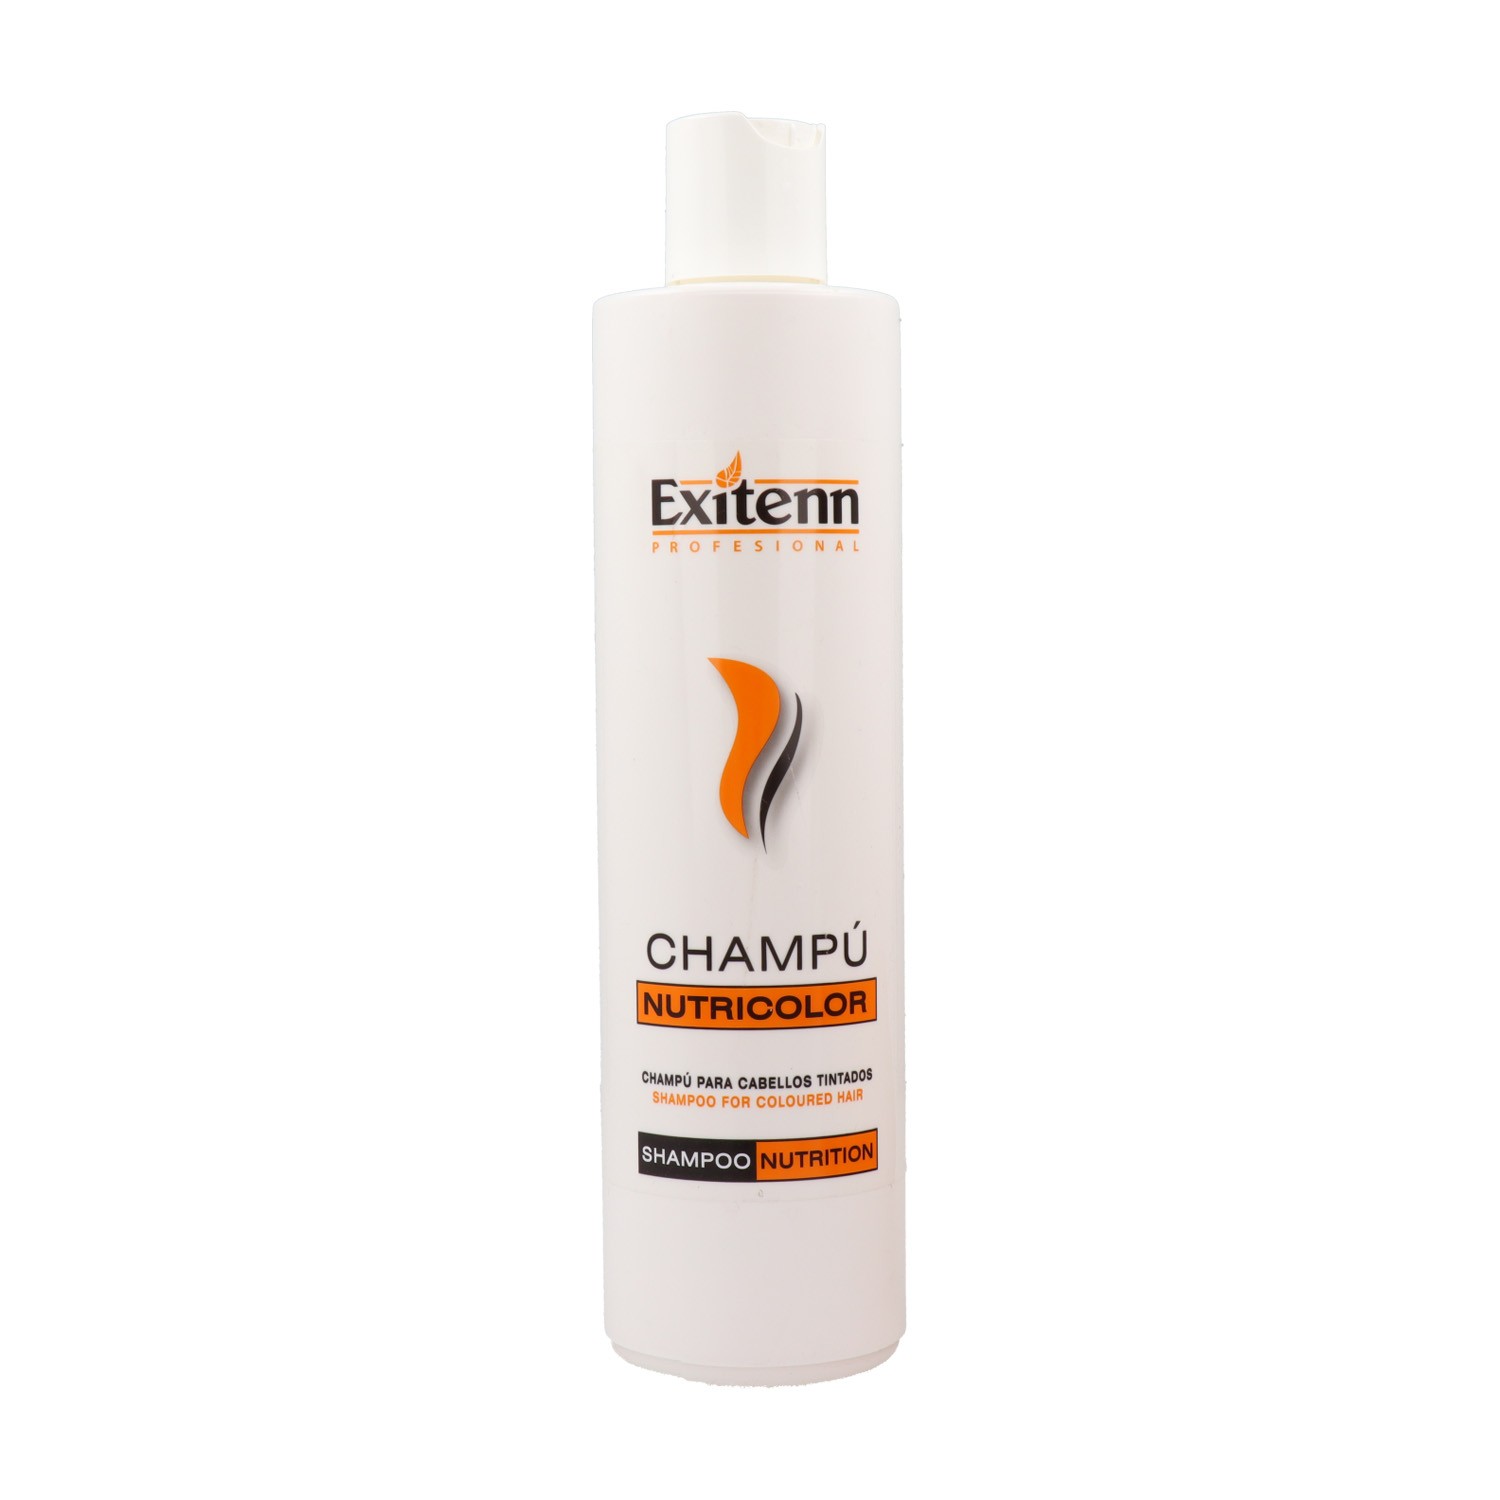 Exitenn Nutricolore Shampoo 500 ml